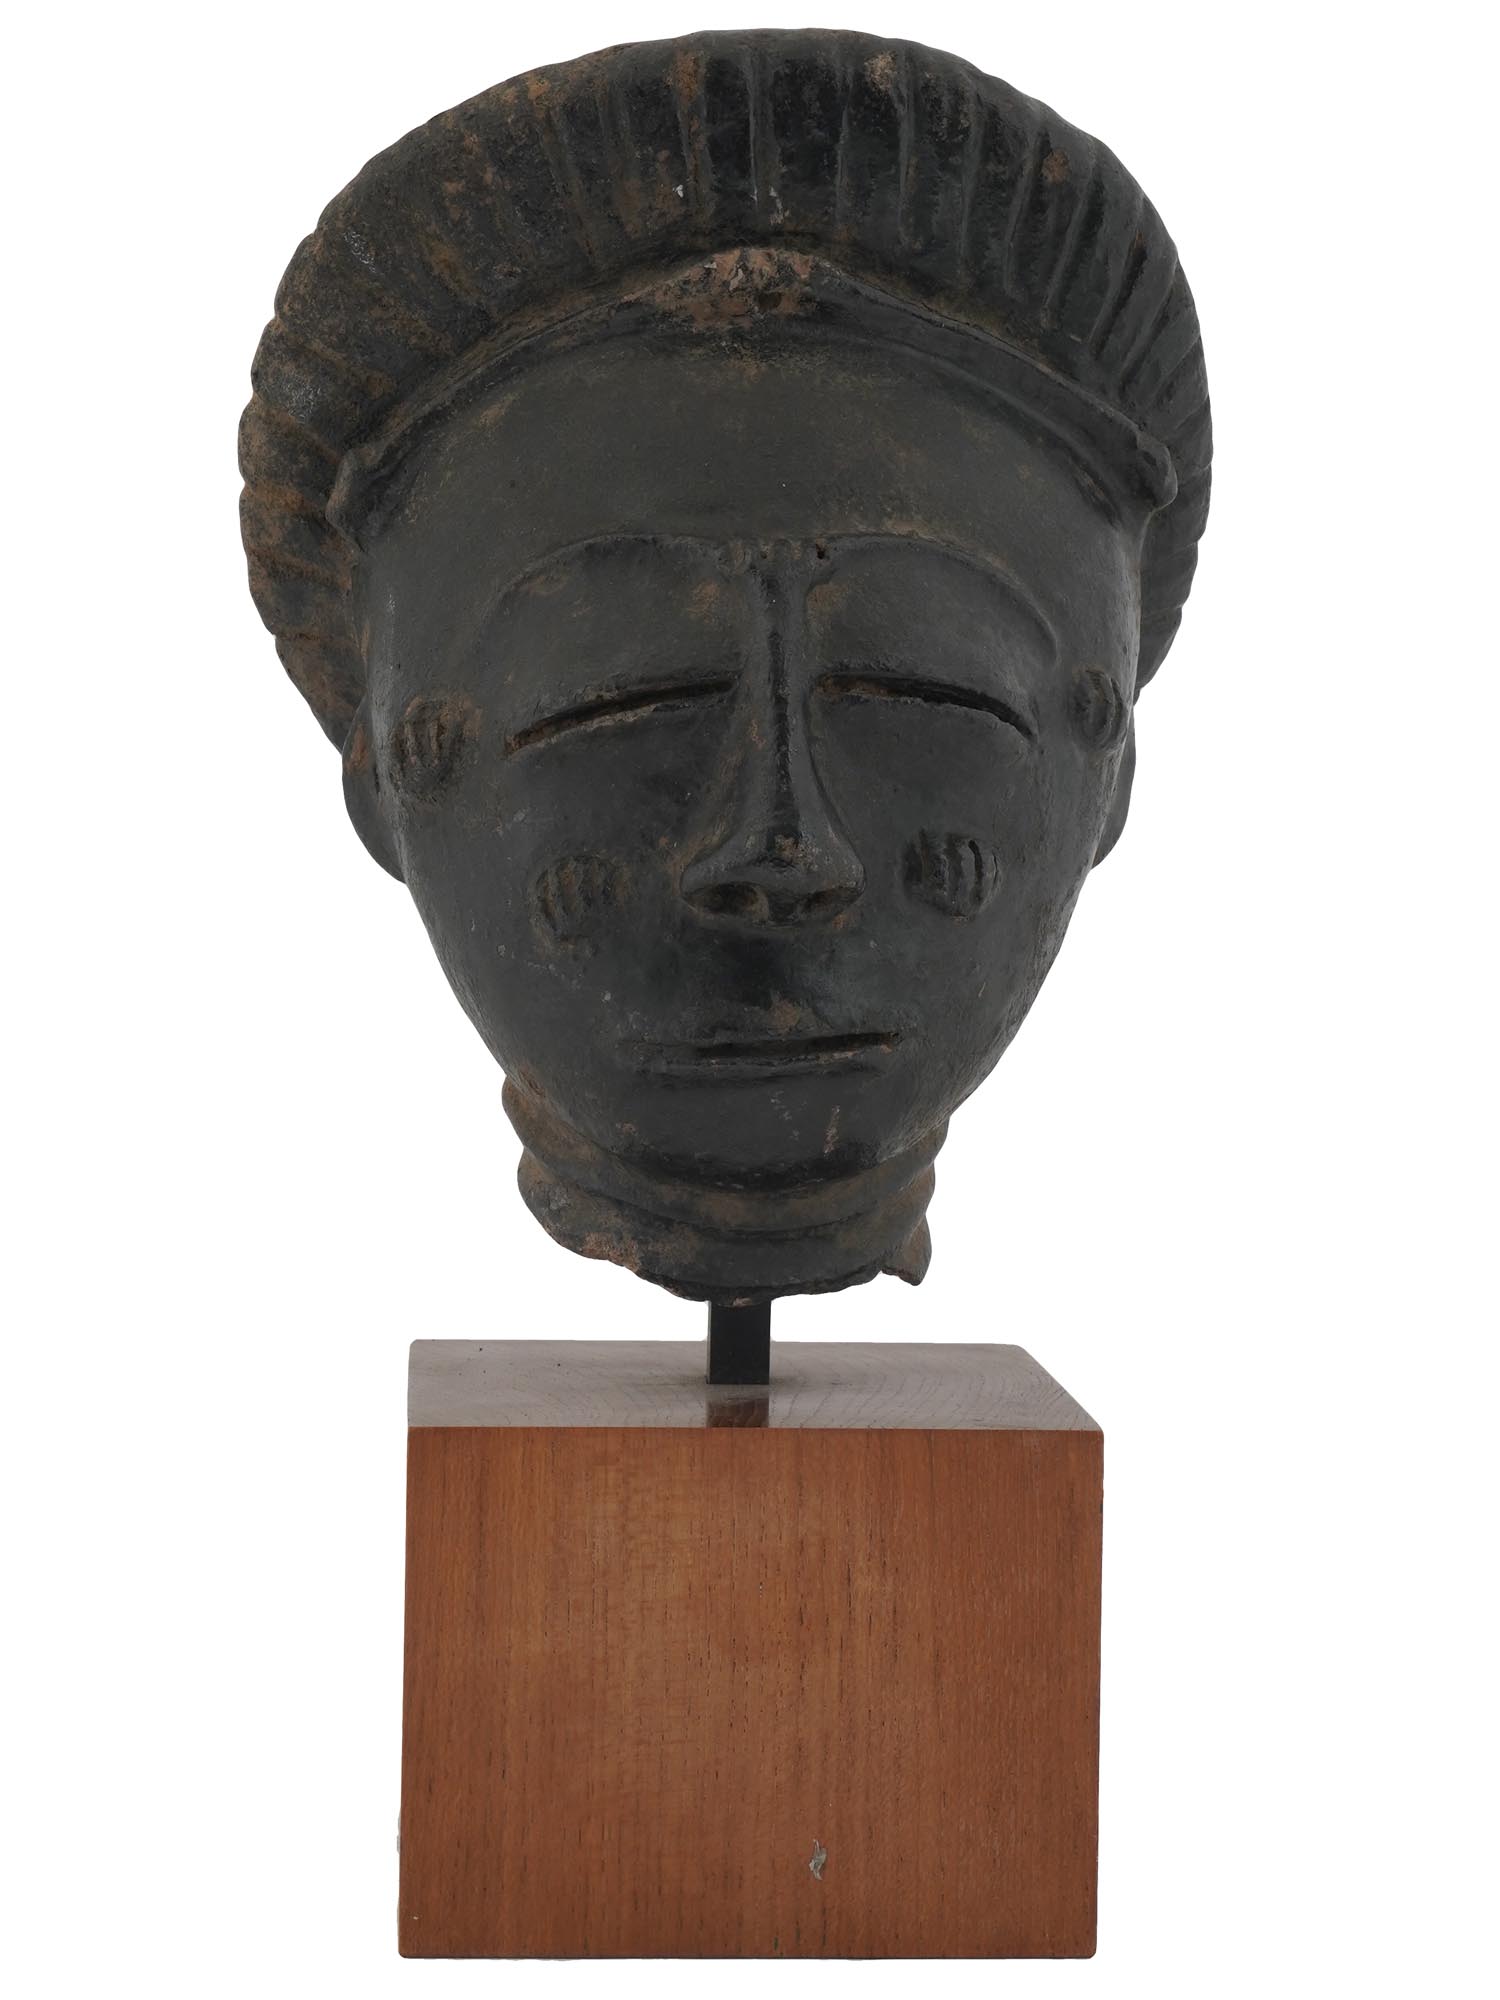 ANTIQUE 18TH CENT AFRICAN BRONZE HEAD SCULPTURE PIC-1